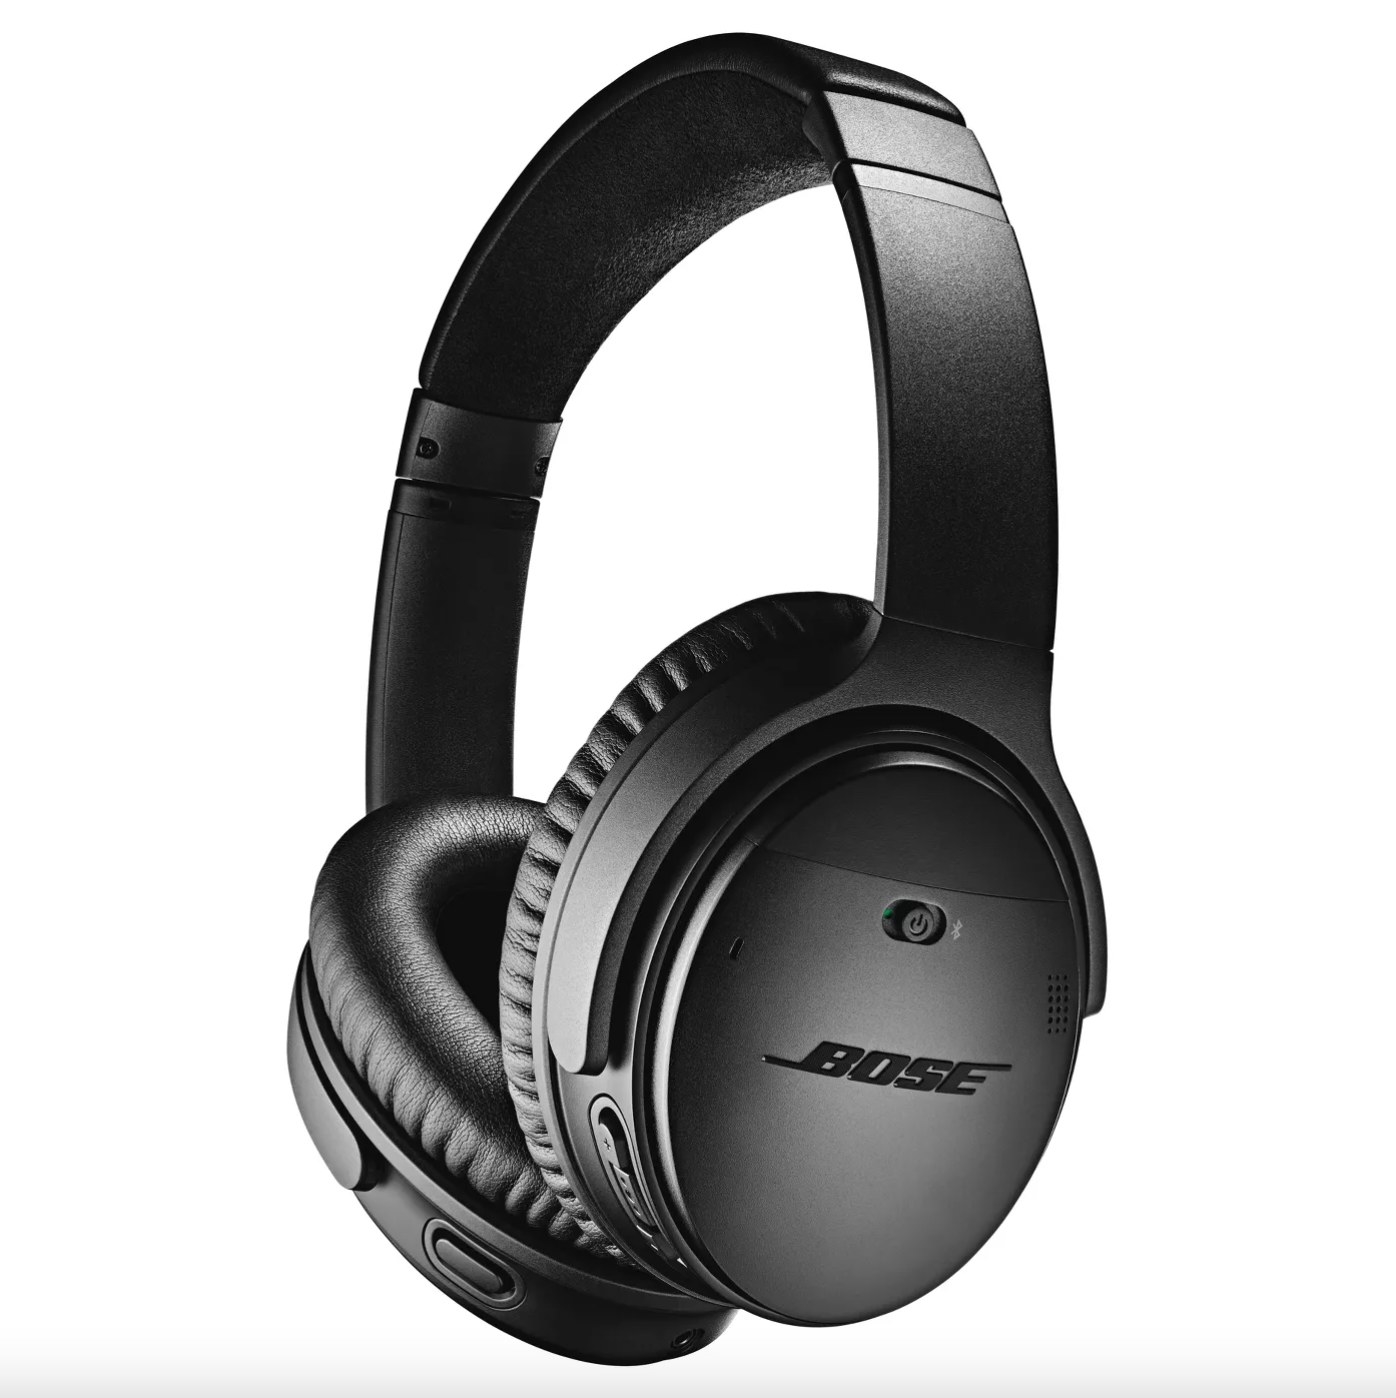 The Bose QuietComfort bluetooth headphones in black